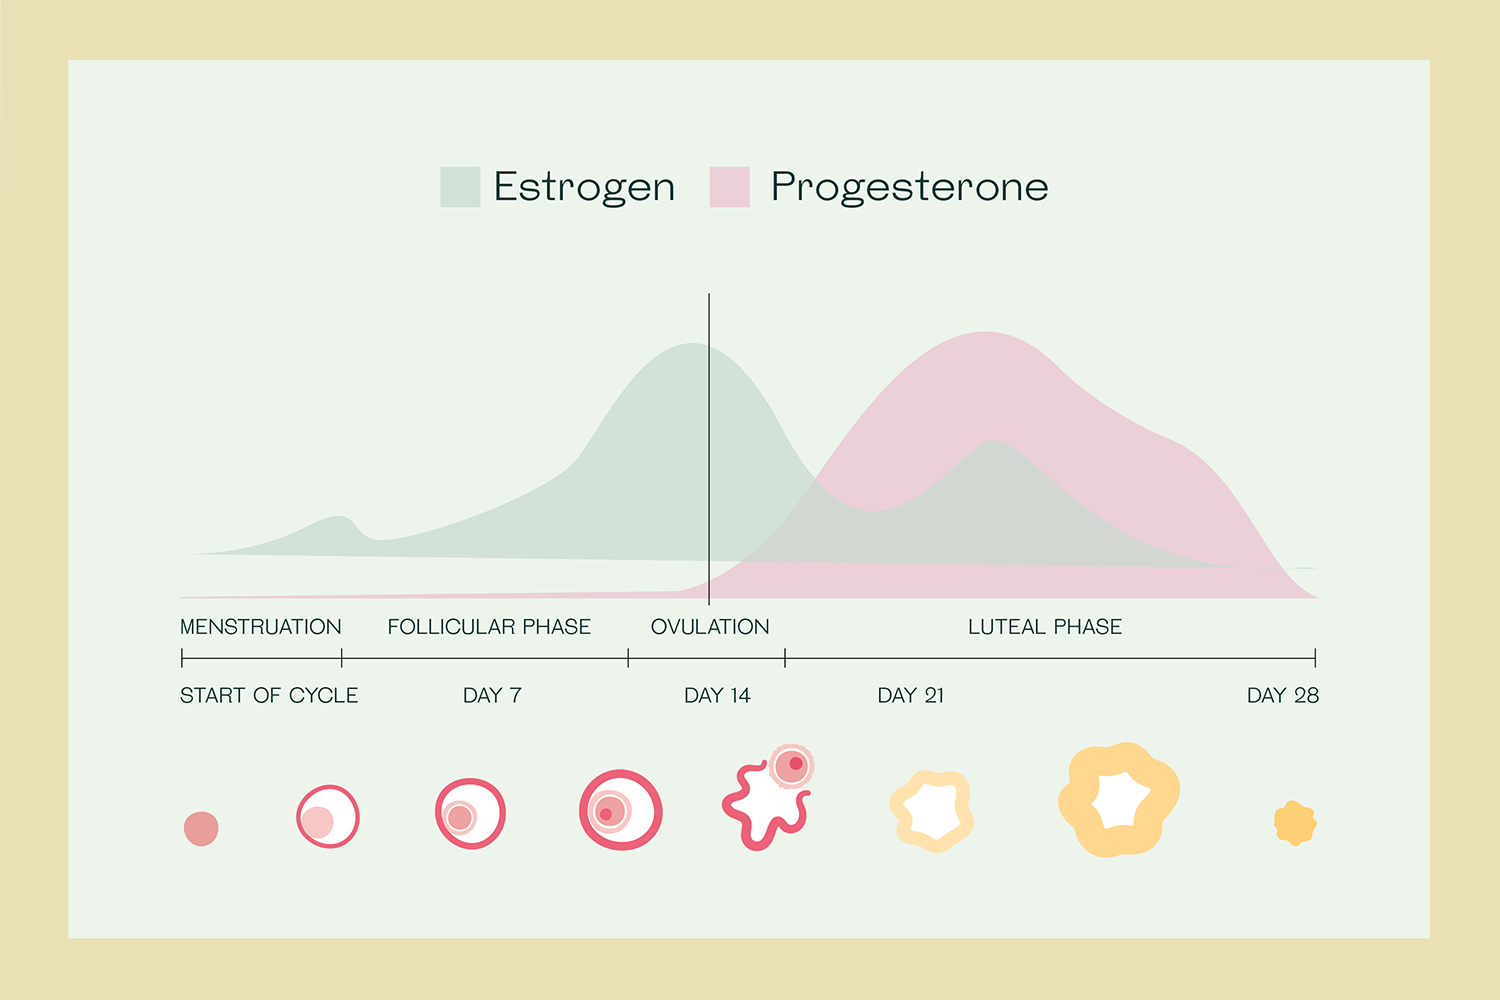 estrogen vs progesterone image